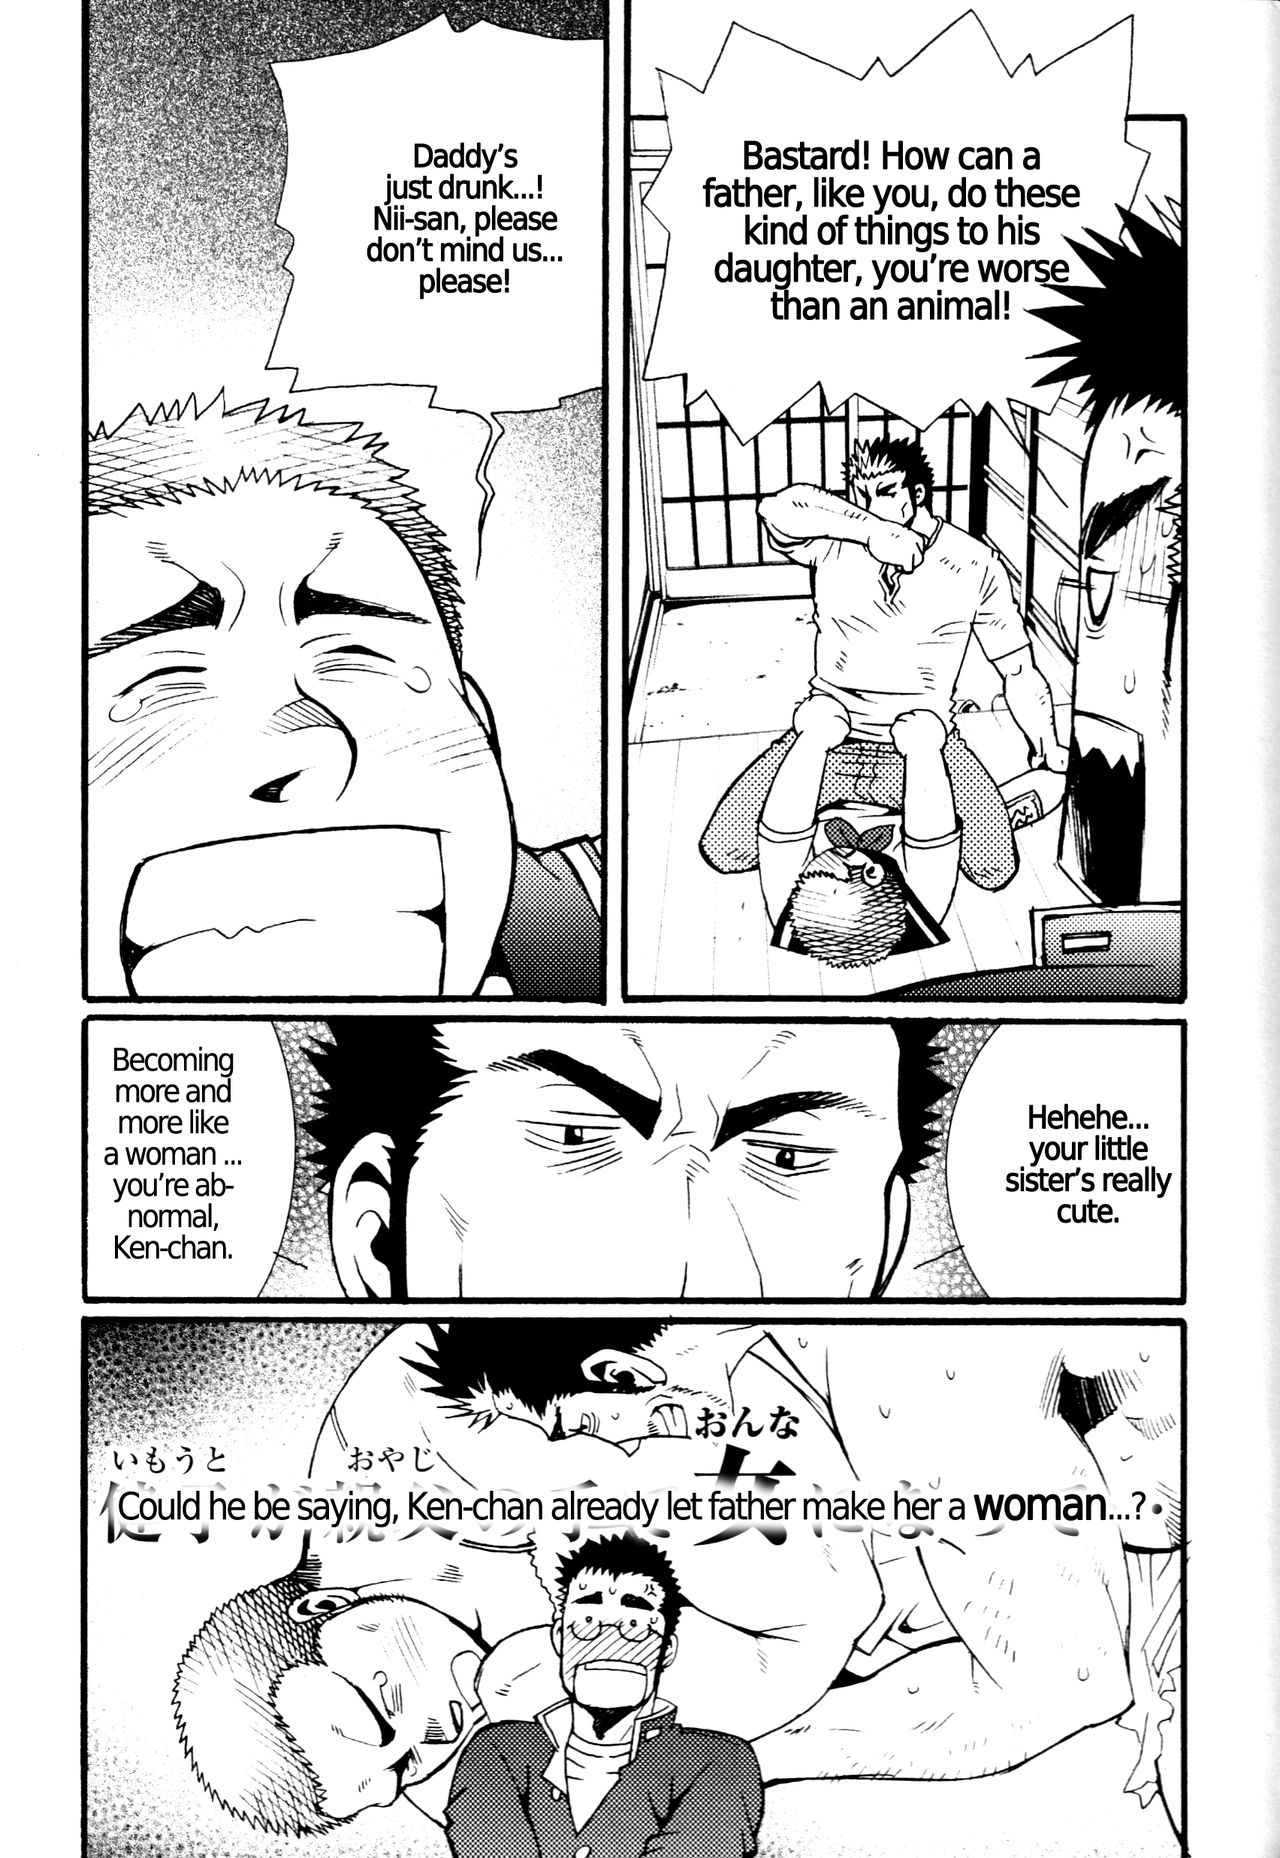 [Tsukasa Matsuzaki] Chapter 7 / Chapter 8 - Outdoor Athlete's Exposure / Cute Voyeur Company [ENG] 